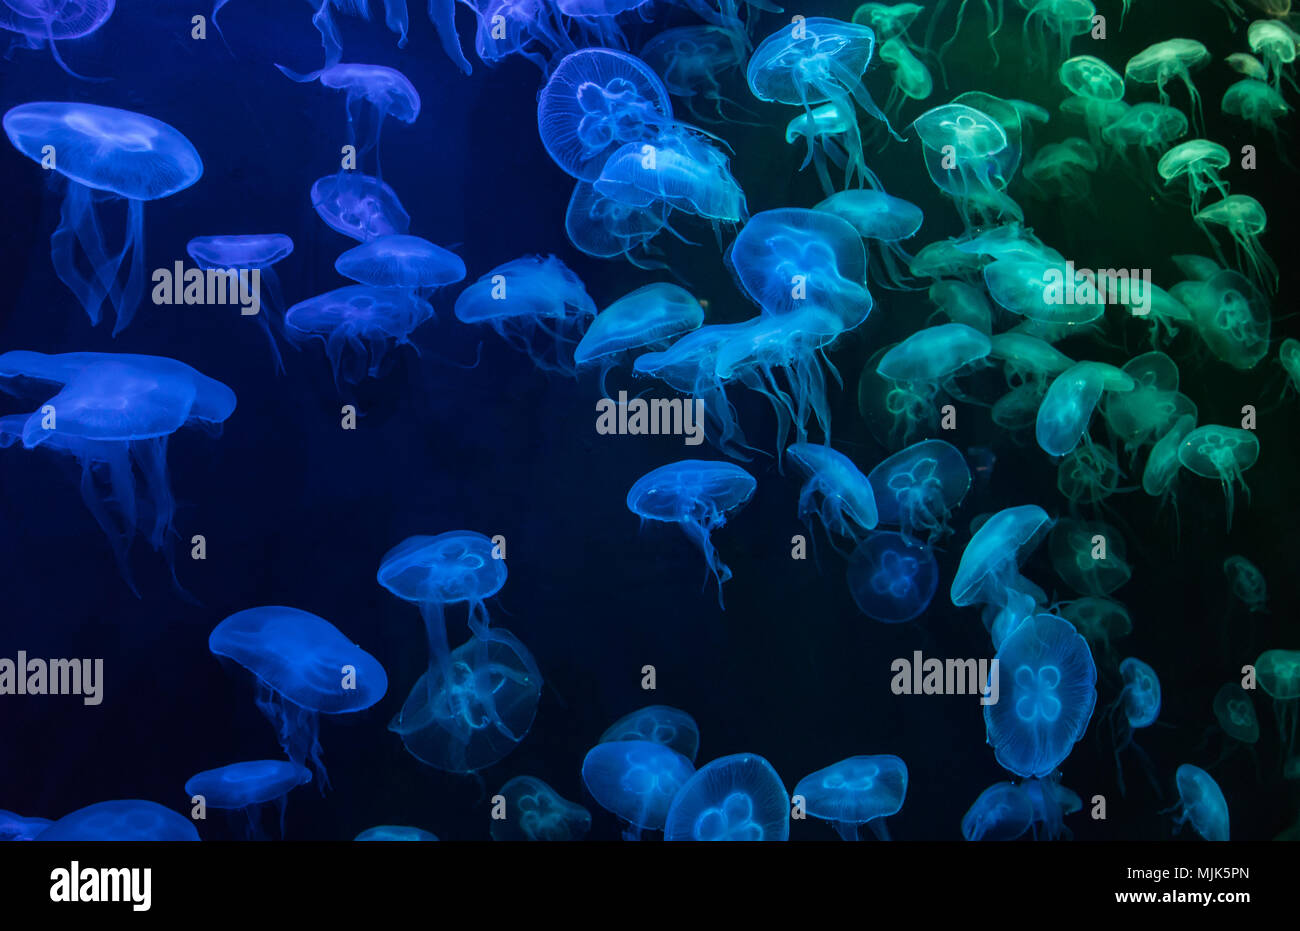 A group of moon jellyfish (Aurelia aurita) in an aquarium under blue and green artificial lighting Stock Photo